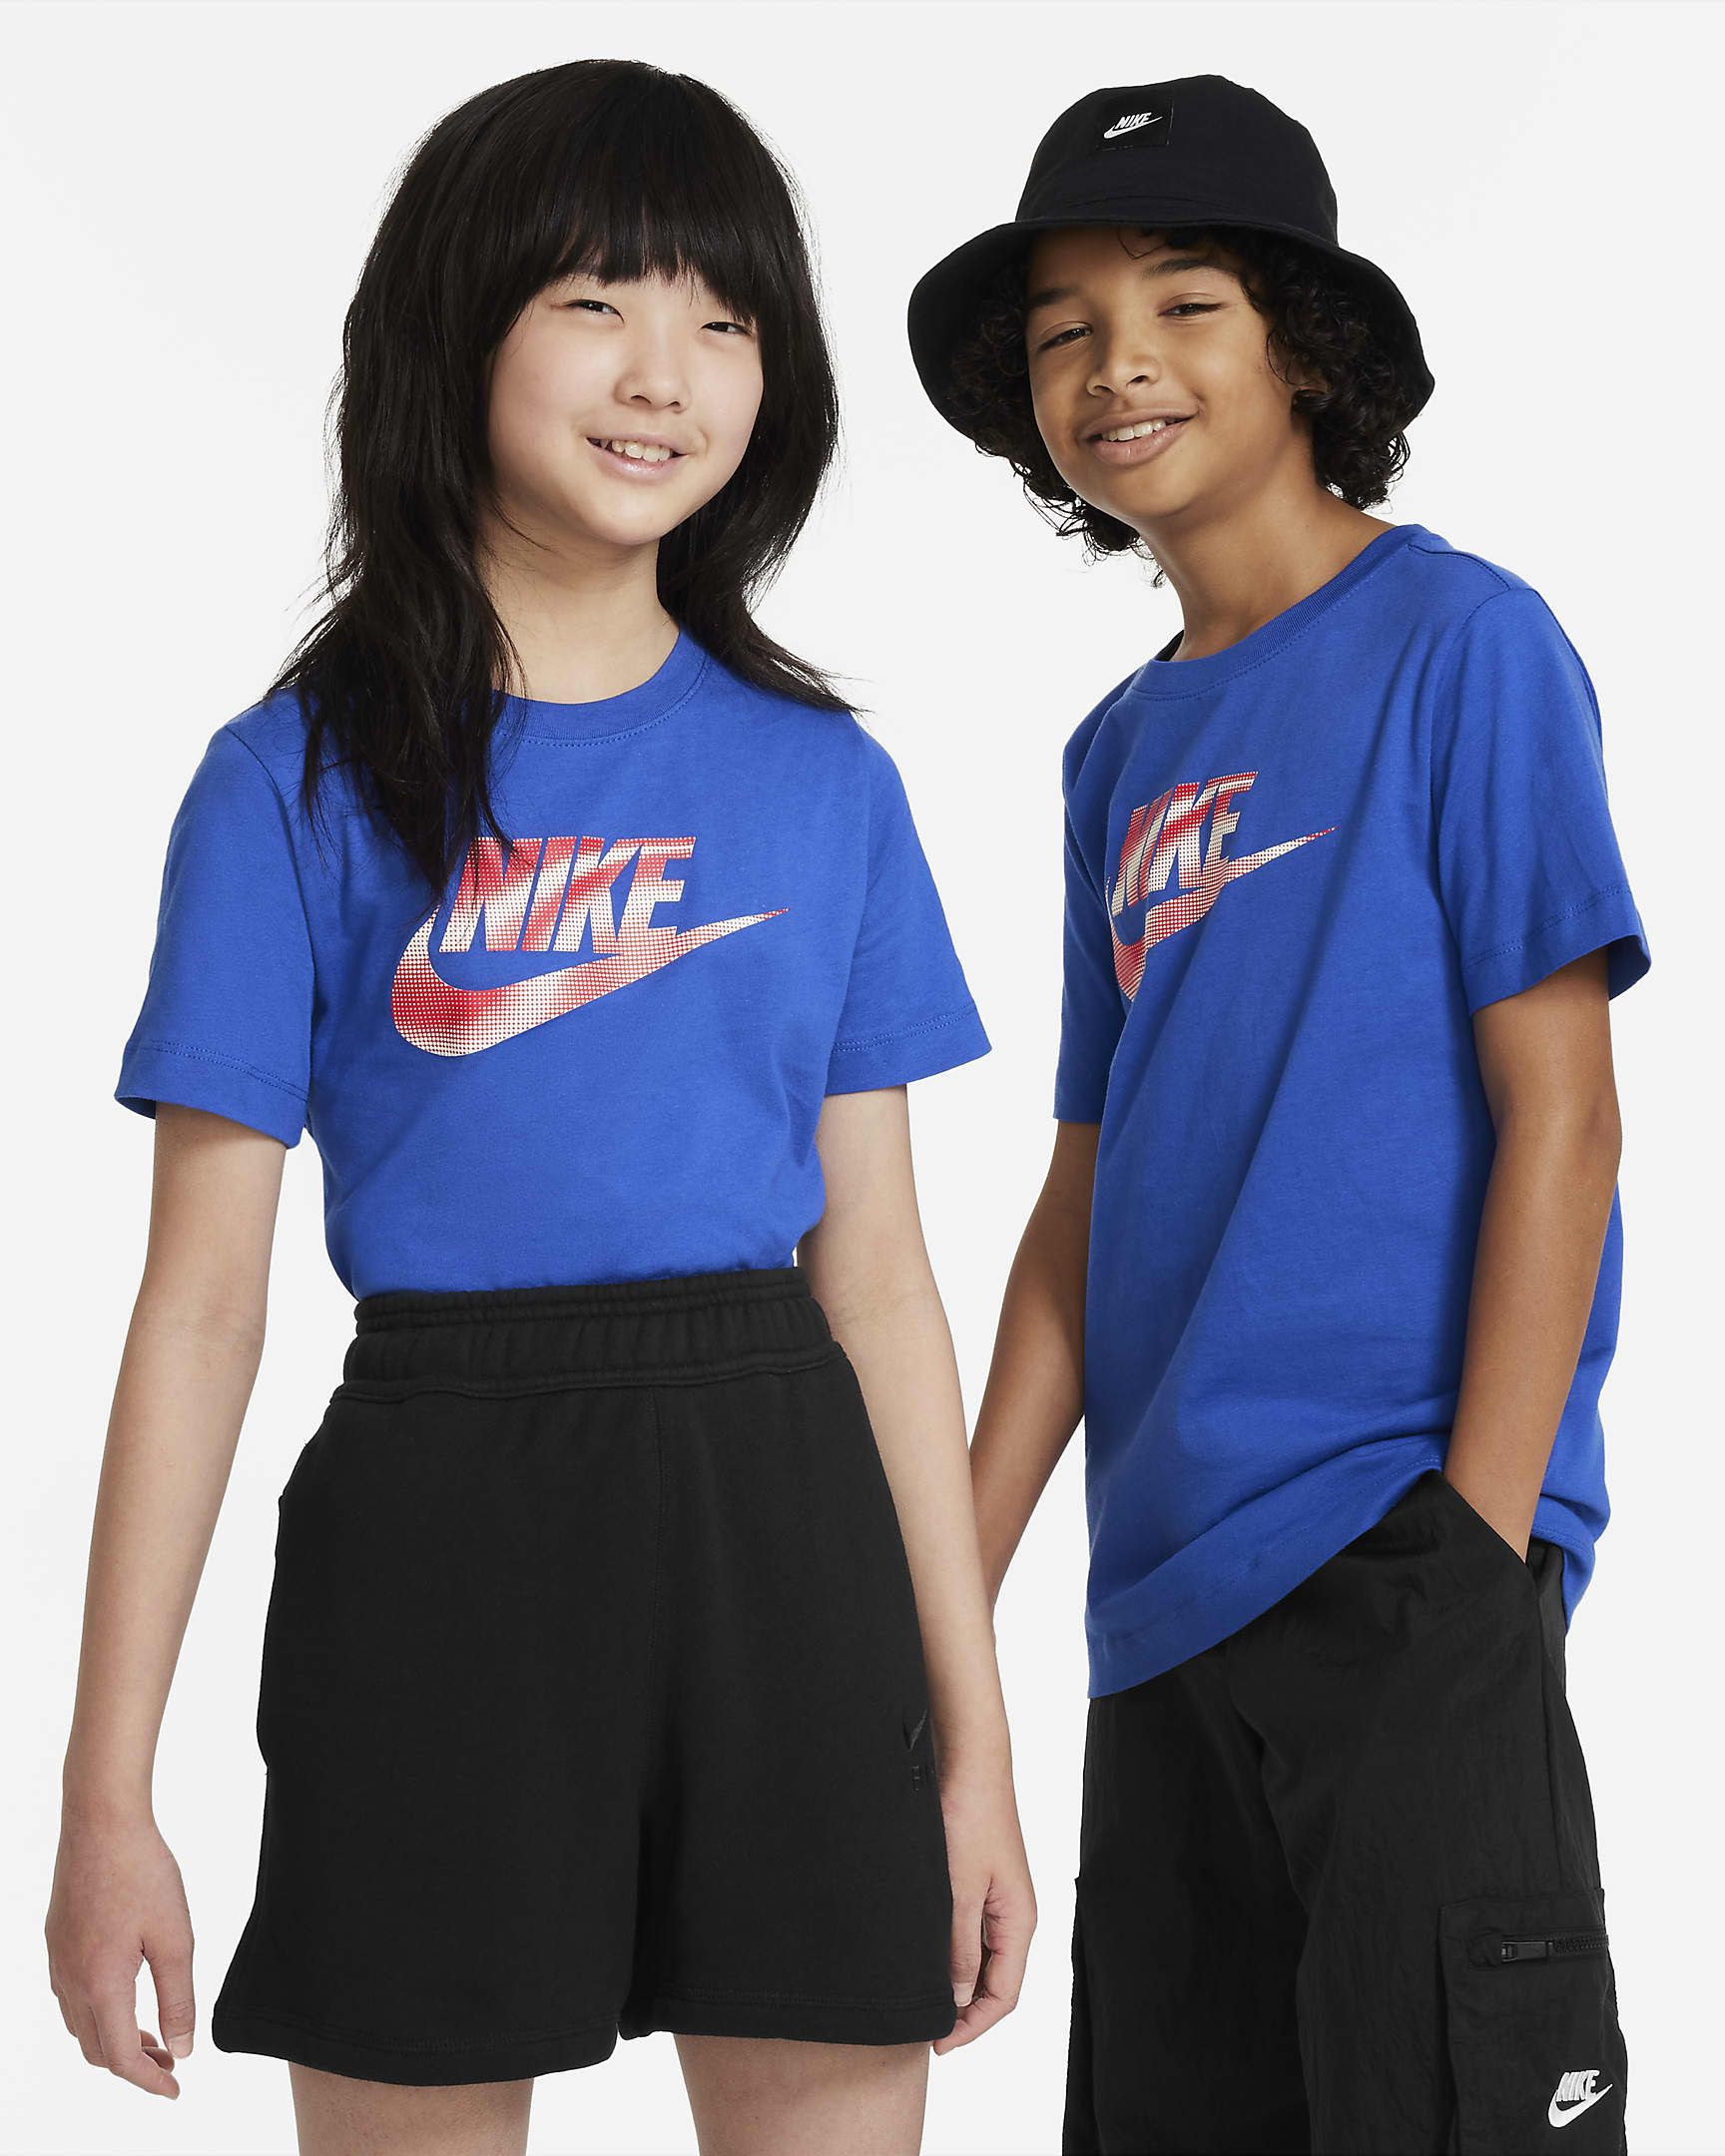 Nike Sportswear Big Kids' T-Shirt. Nike.com | Nike (US)